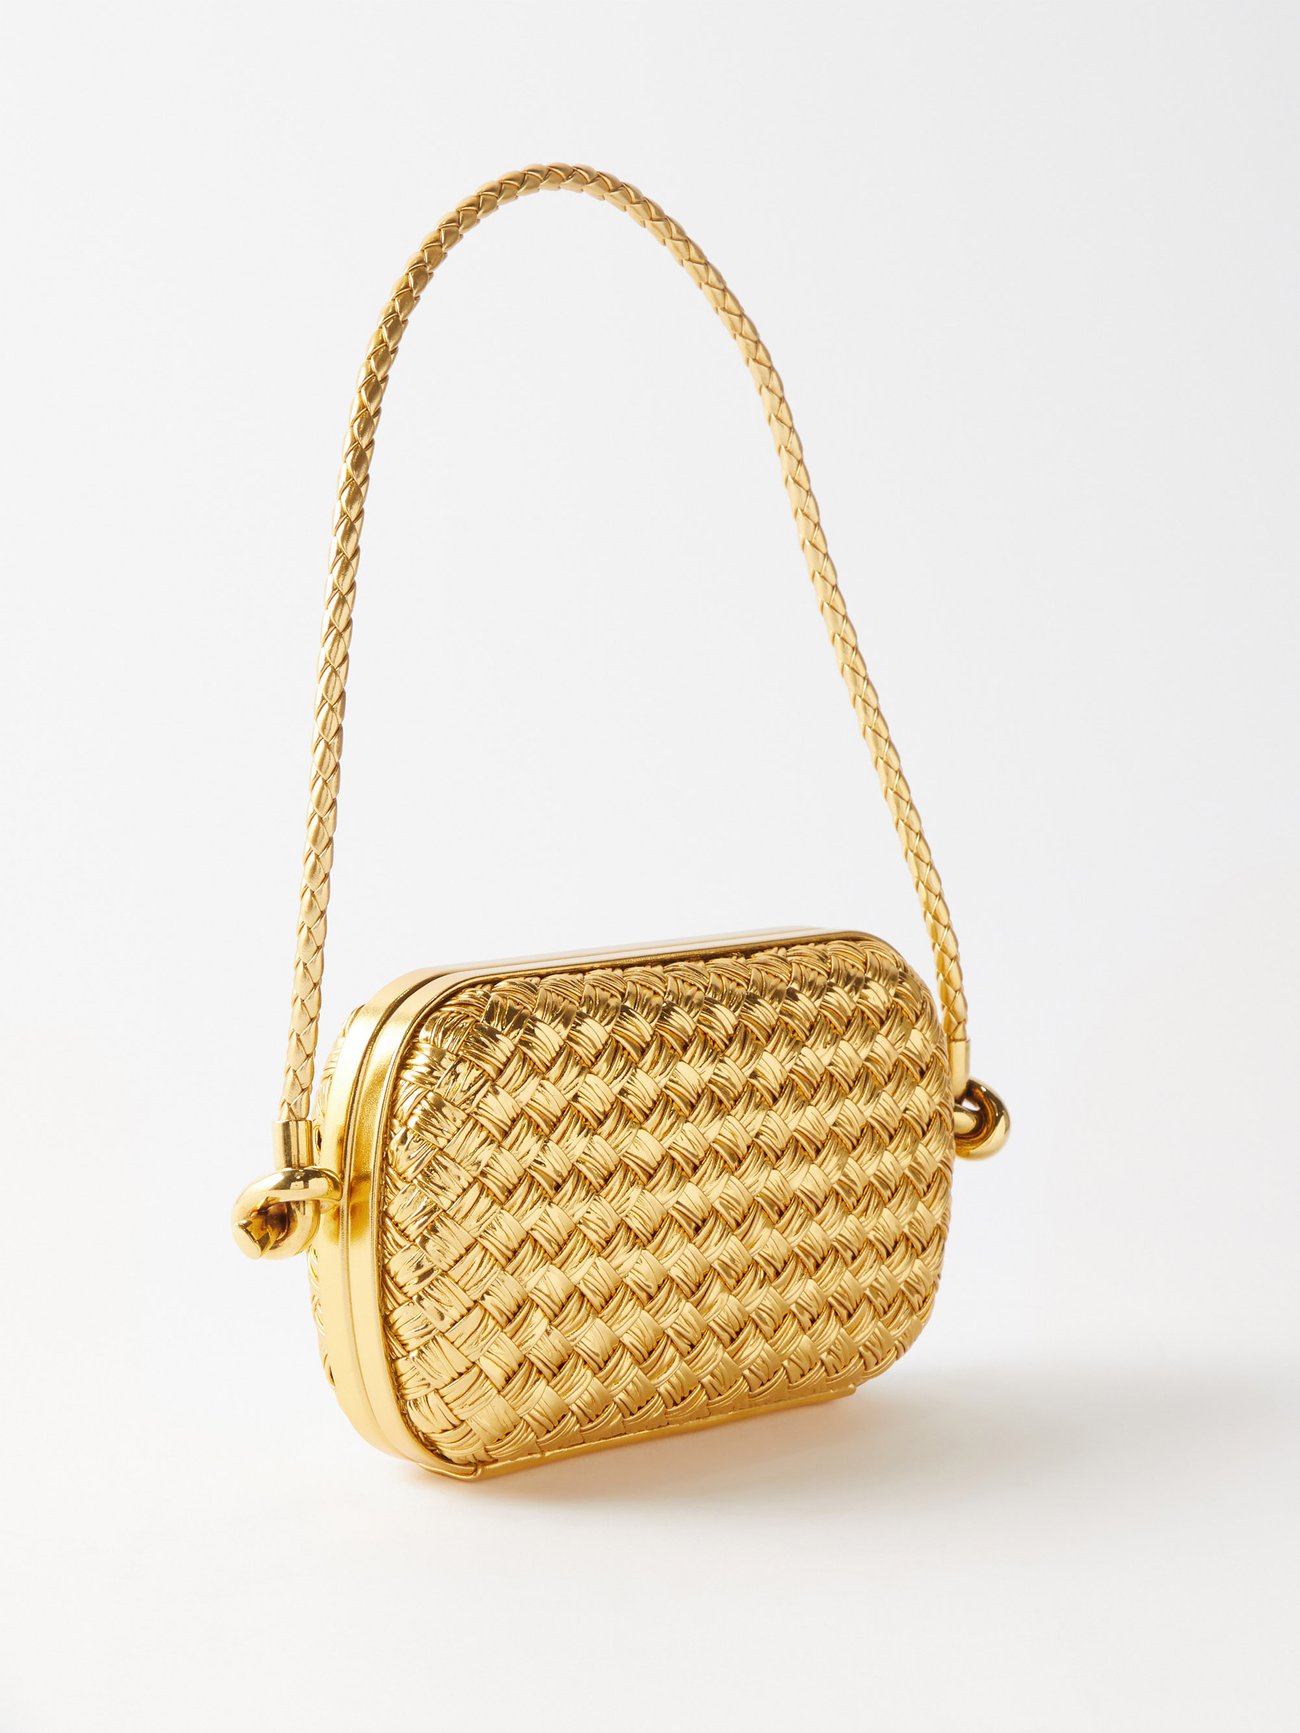 Bottega Veneta Knot Clutch In Metallic Intreccio Leather In Gold